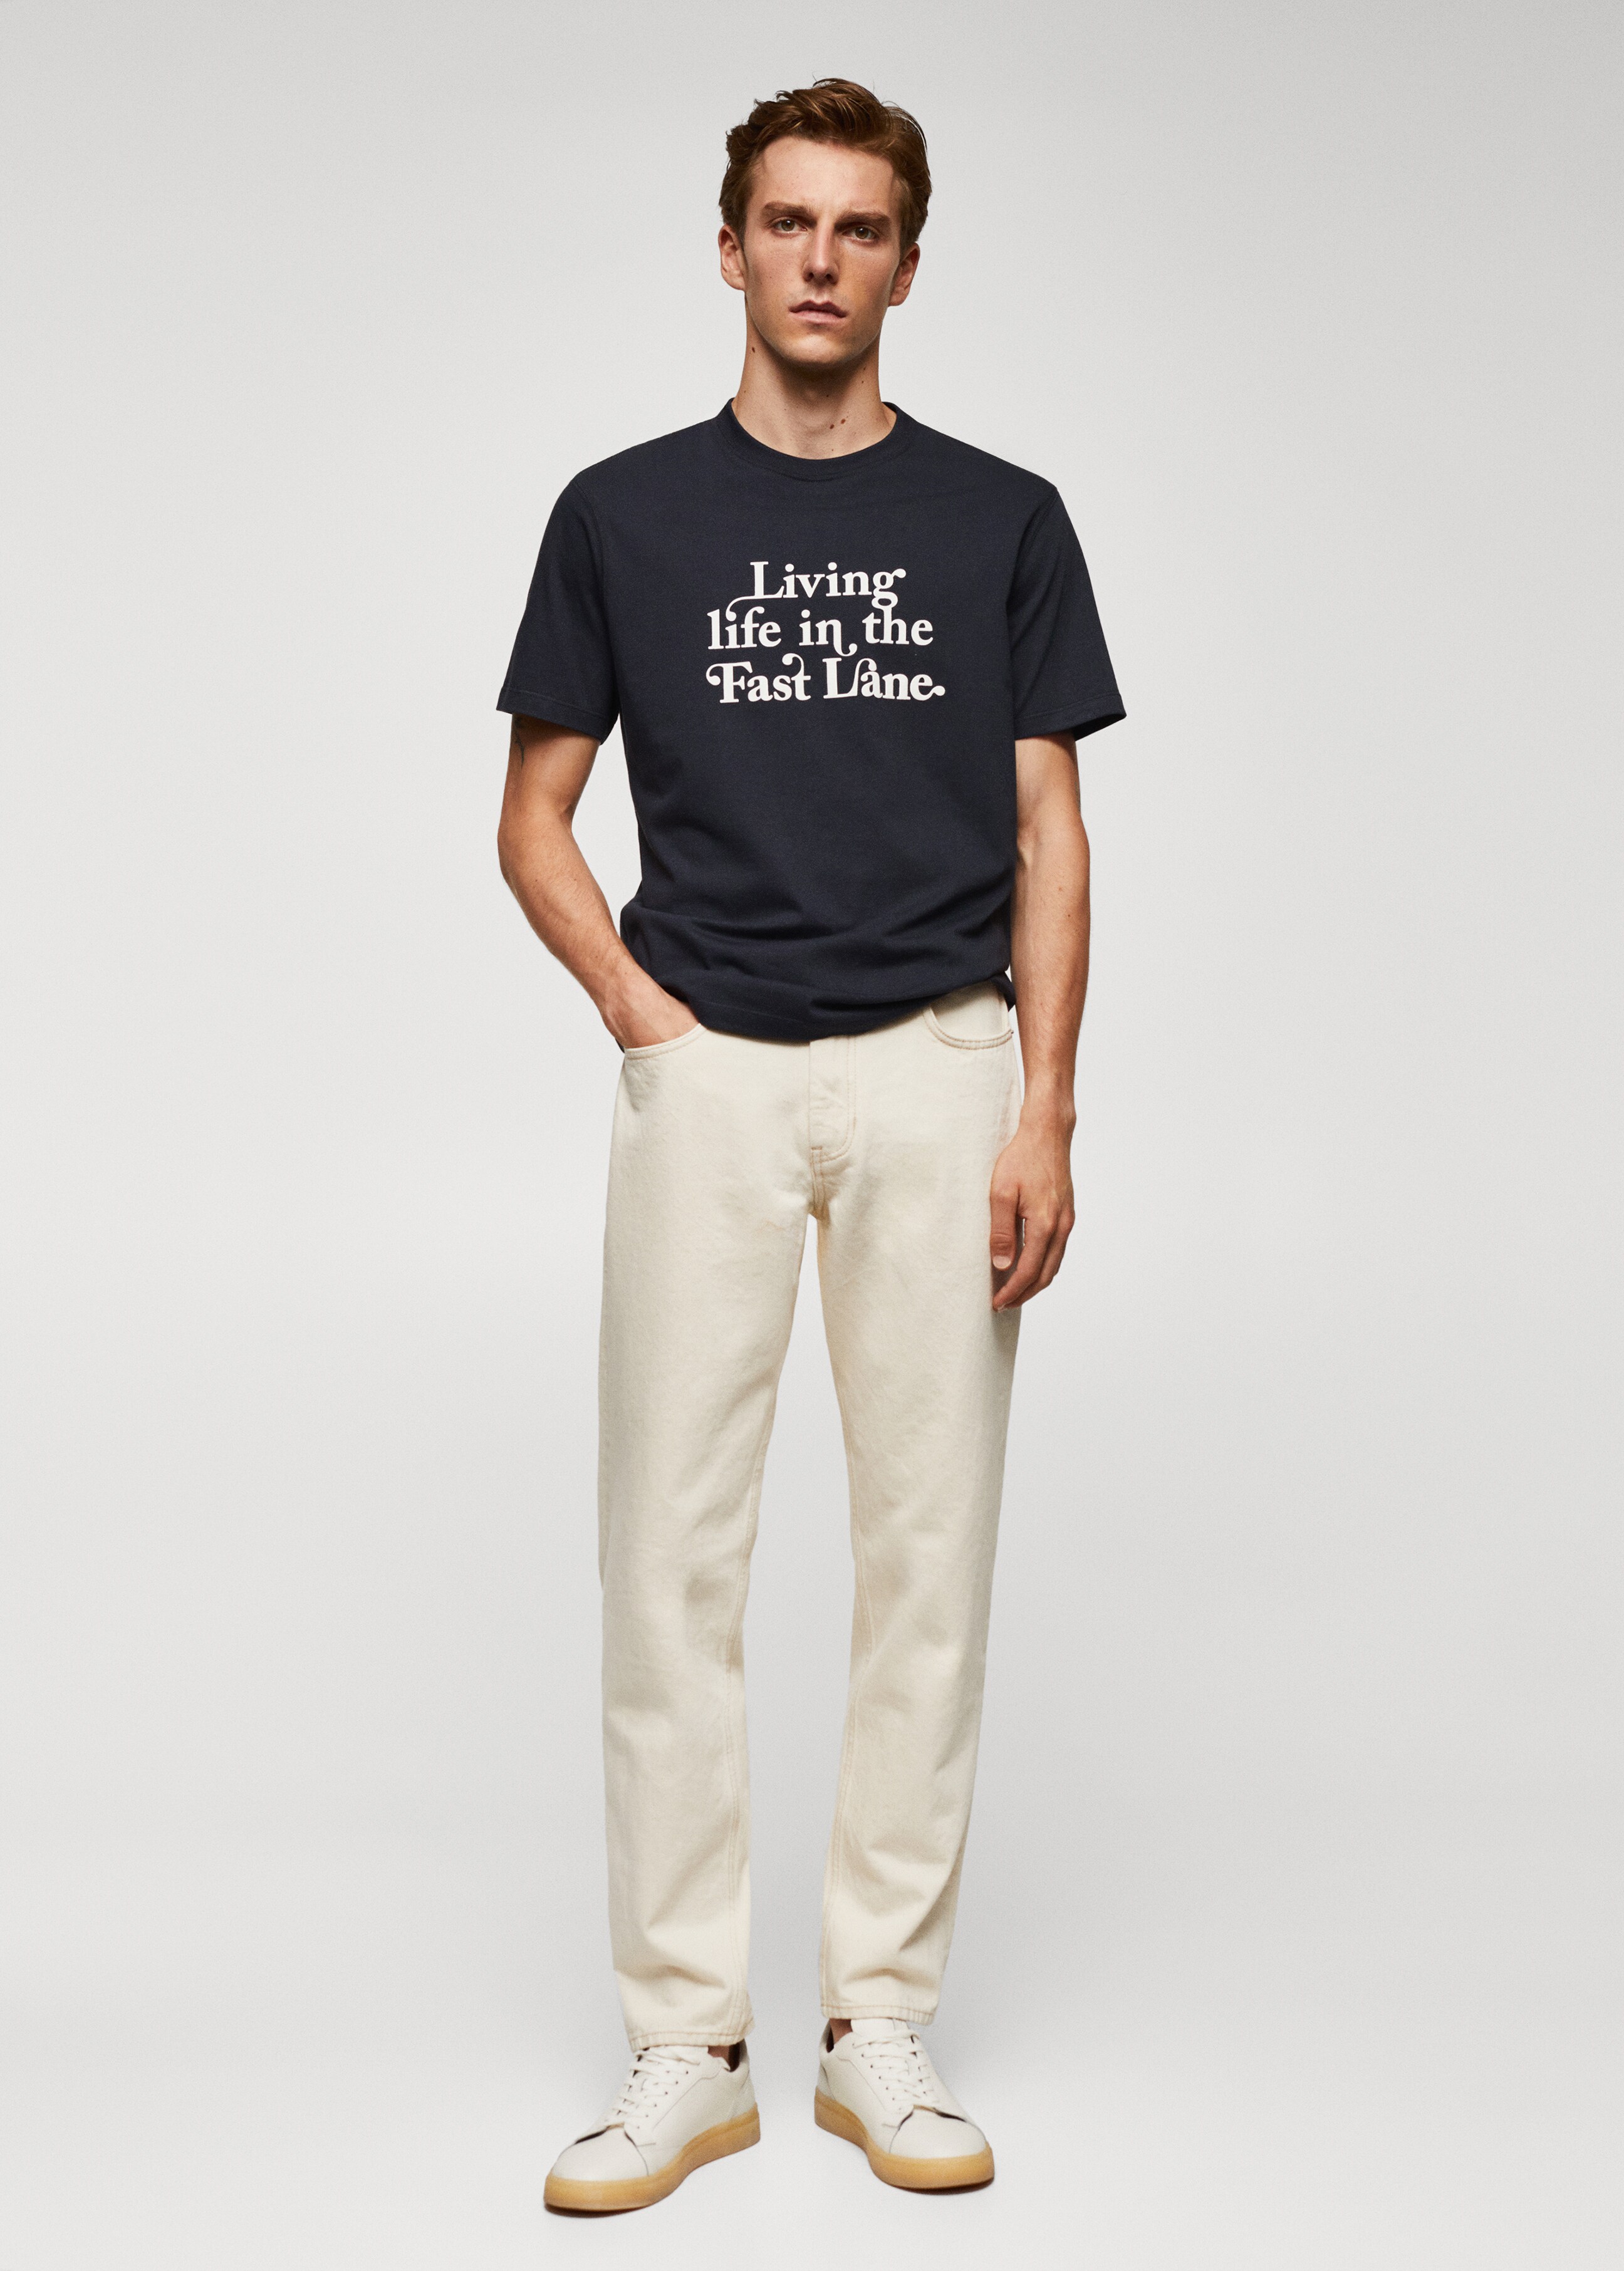 100% cotton printed t-shirt - General plane